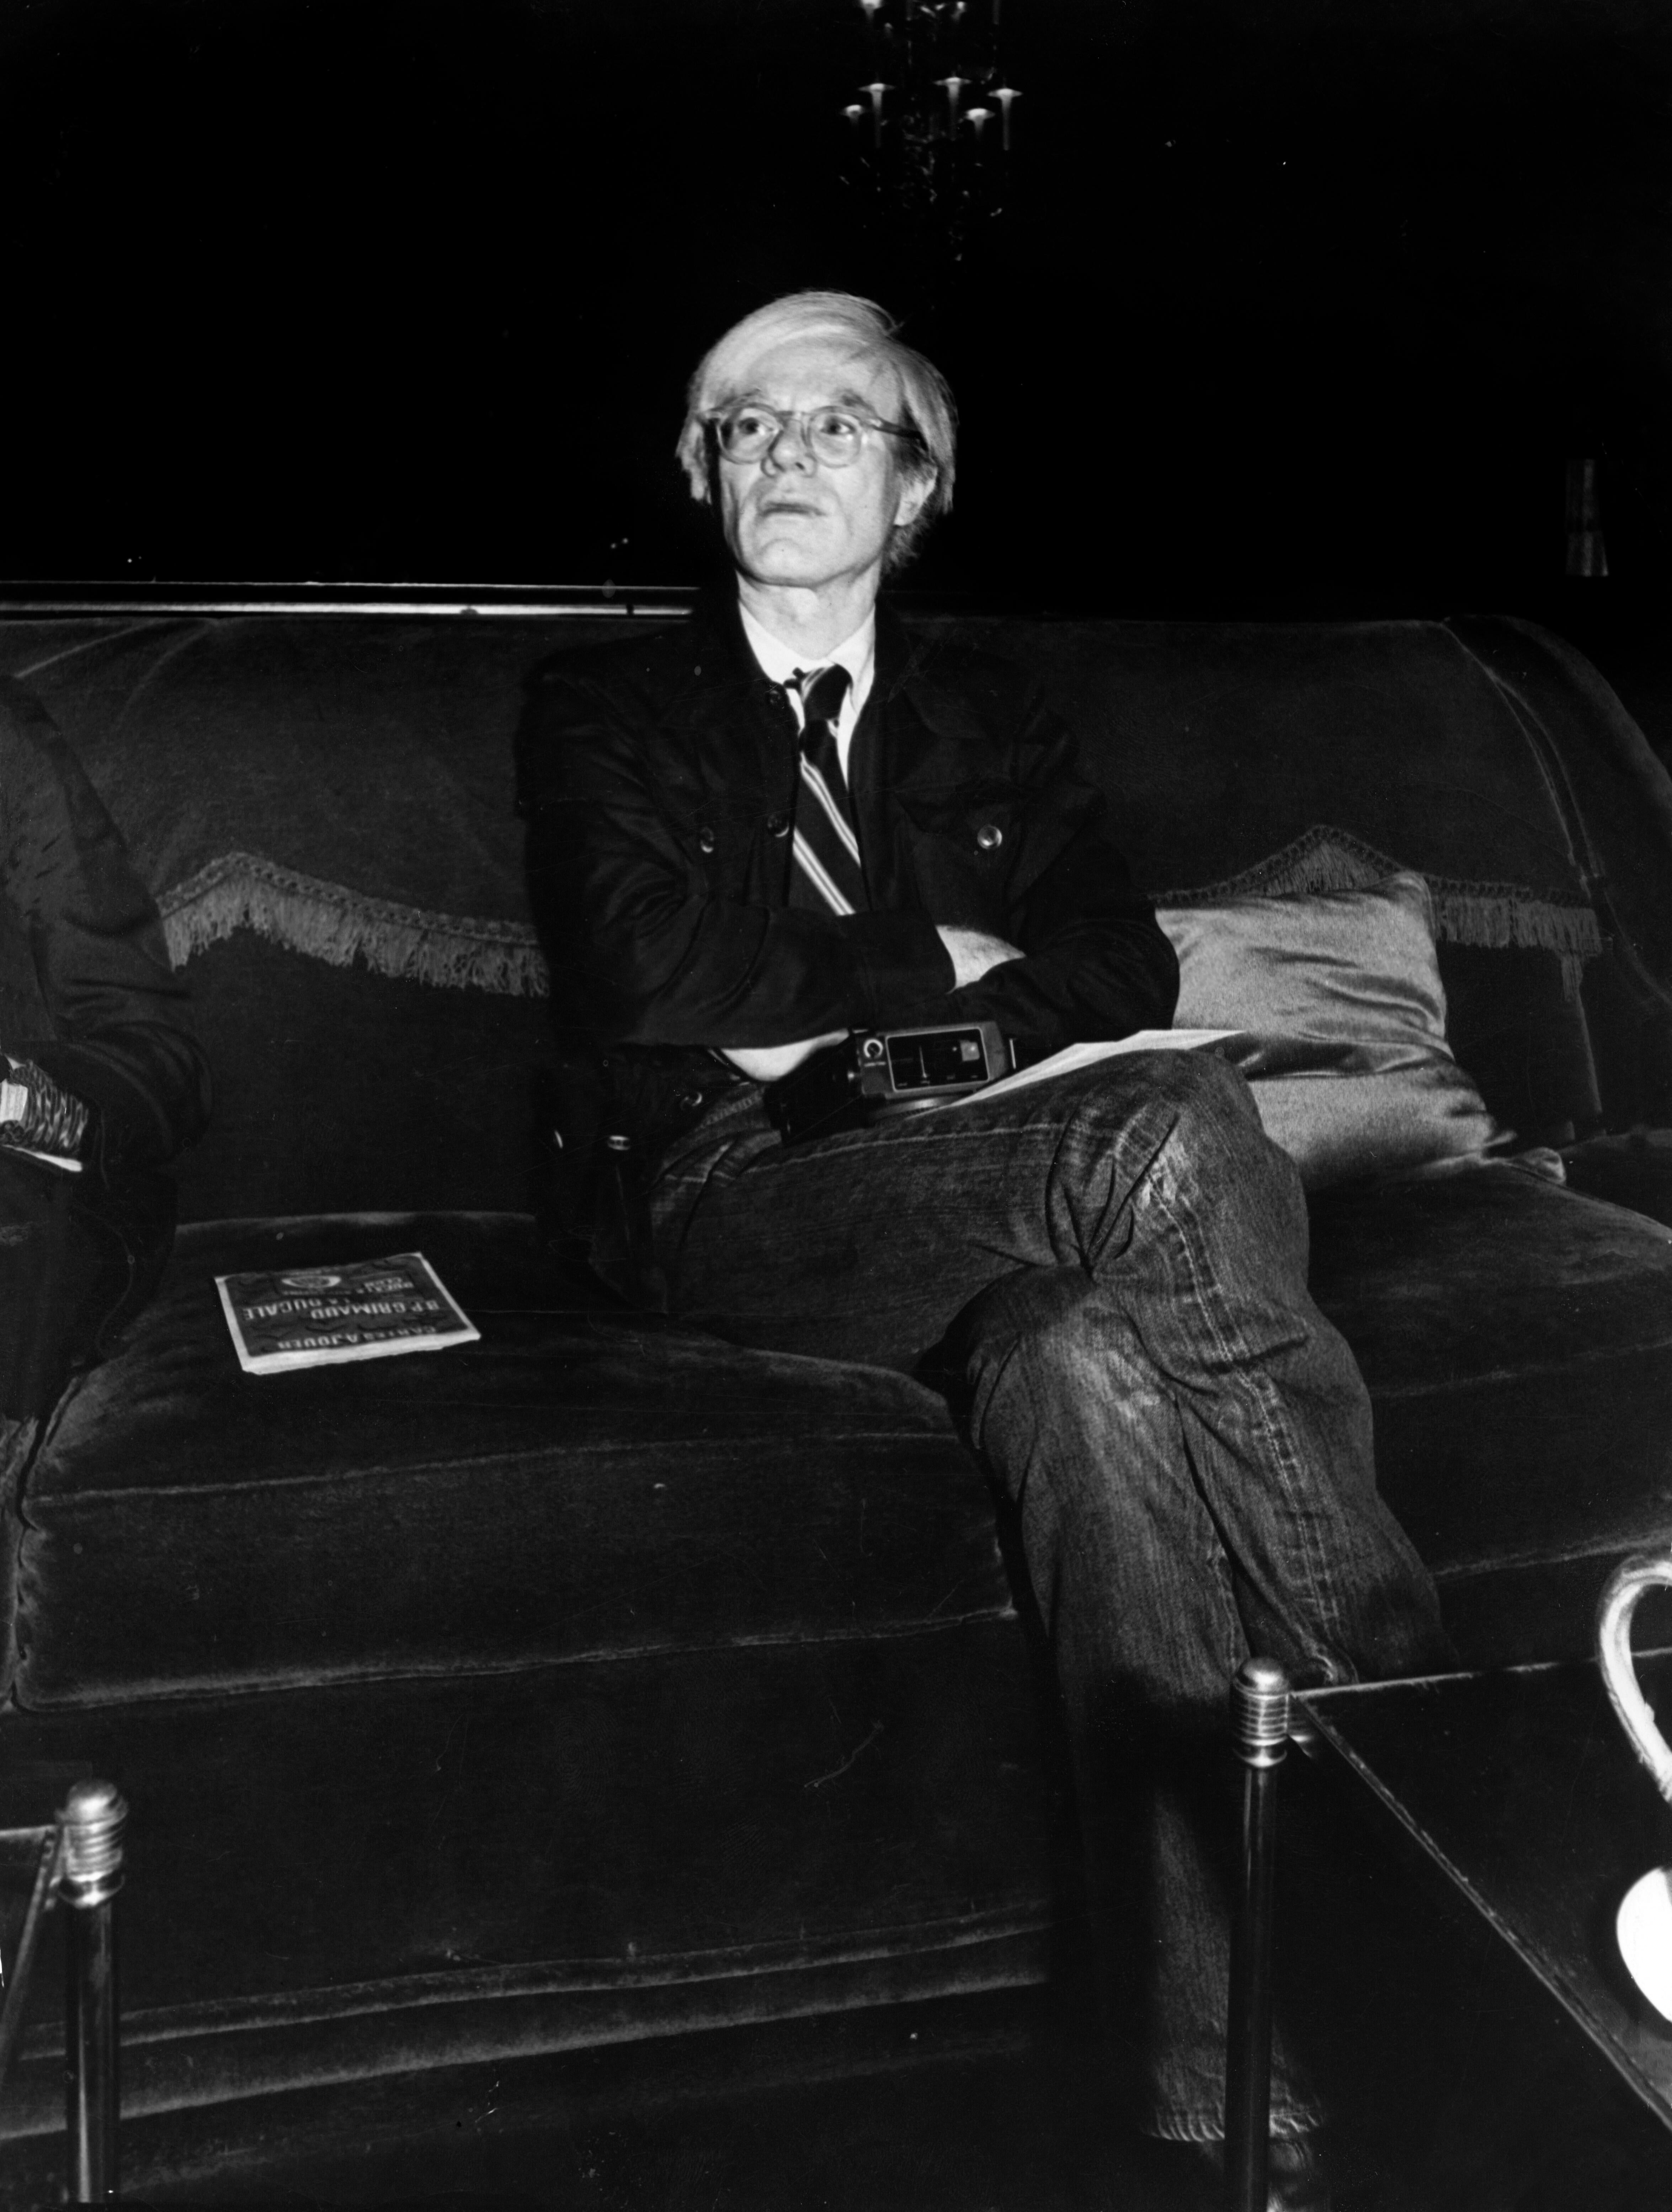 Unknown Portrait Photograph - Andy Warhol Candid Fine Art Print